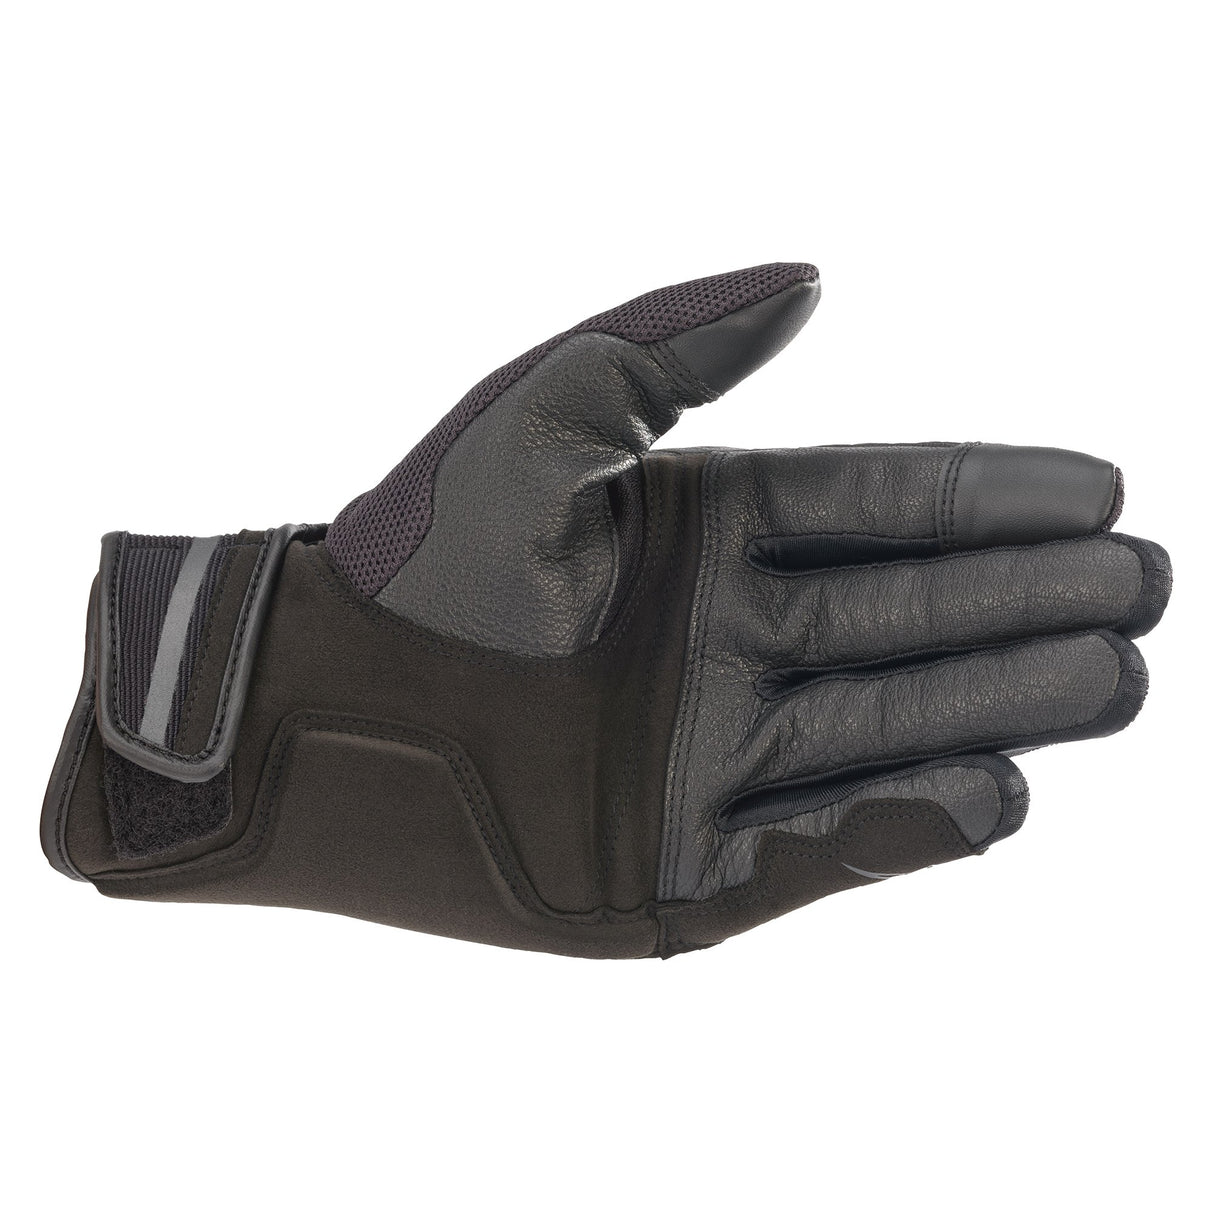 Alpinestars Chrome Motorcycle Gloves - Black/Tar Grey